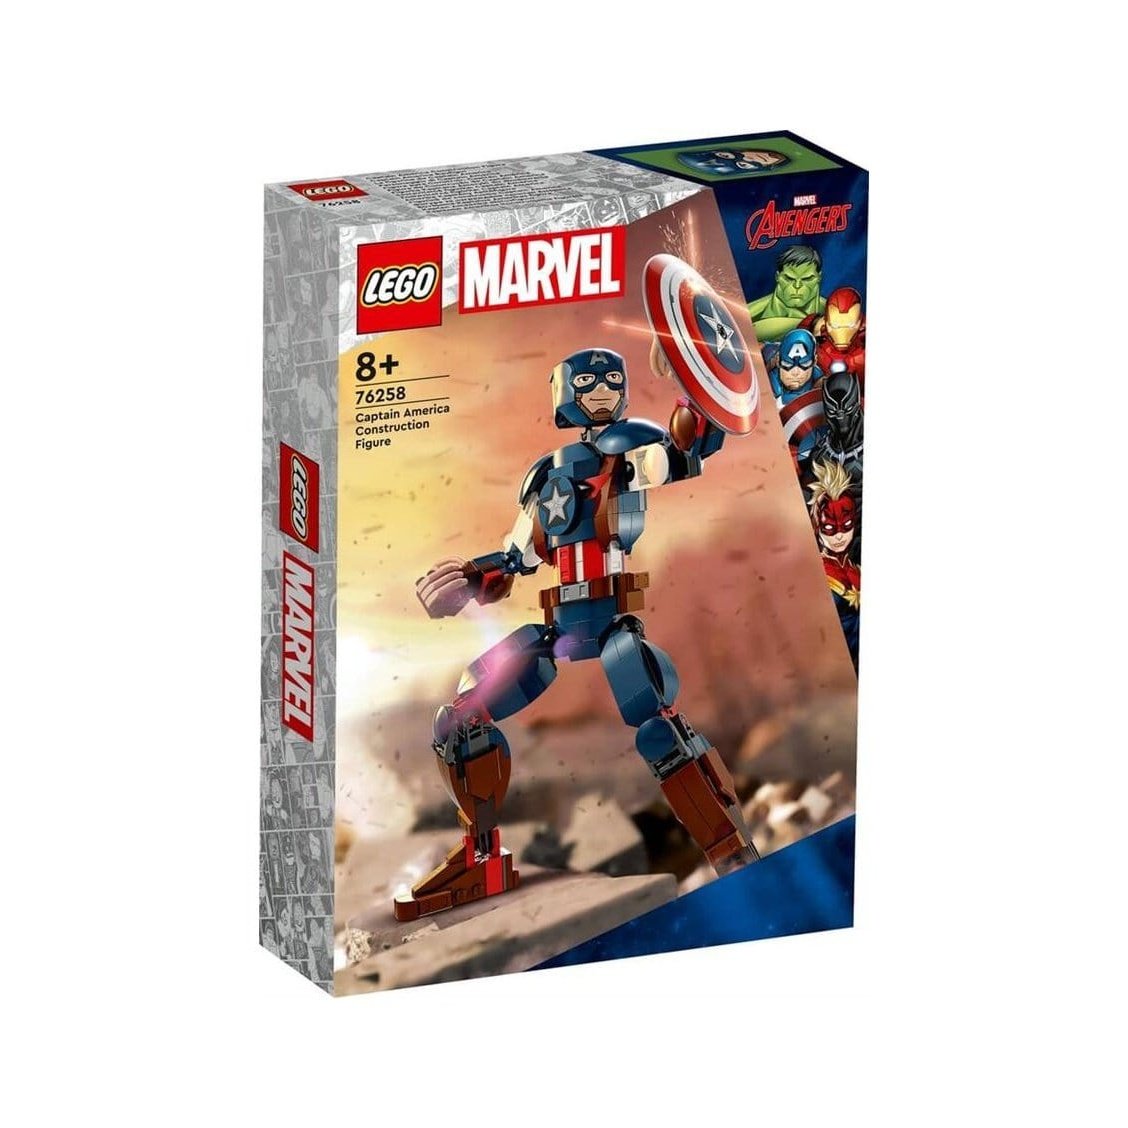 Lego Marvel Captain America Construction Figure 76258 LEGO